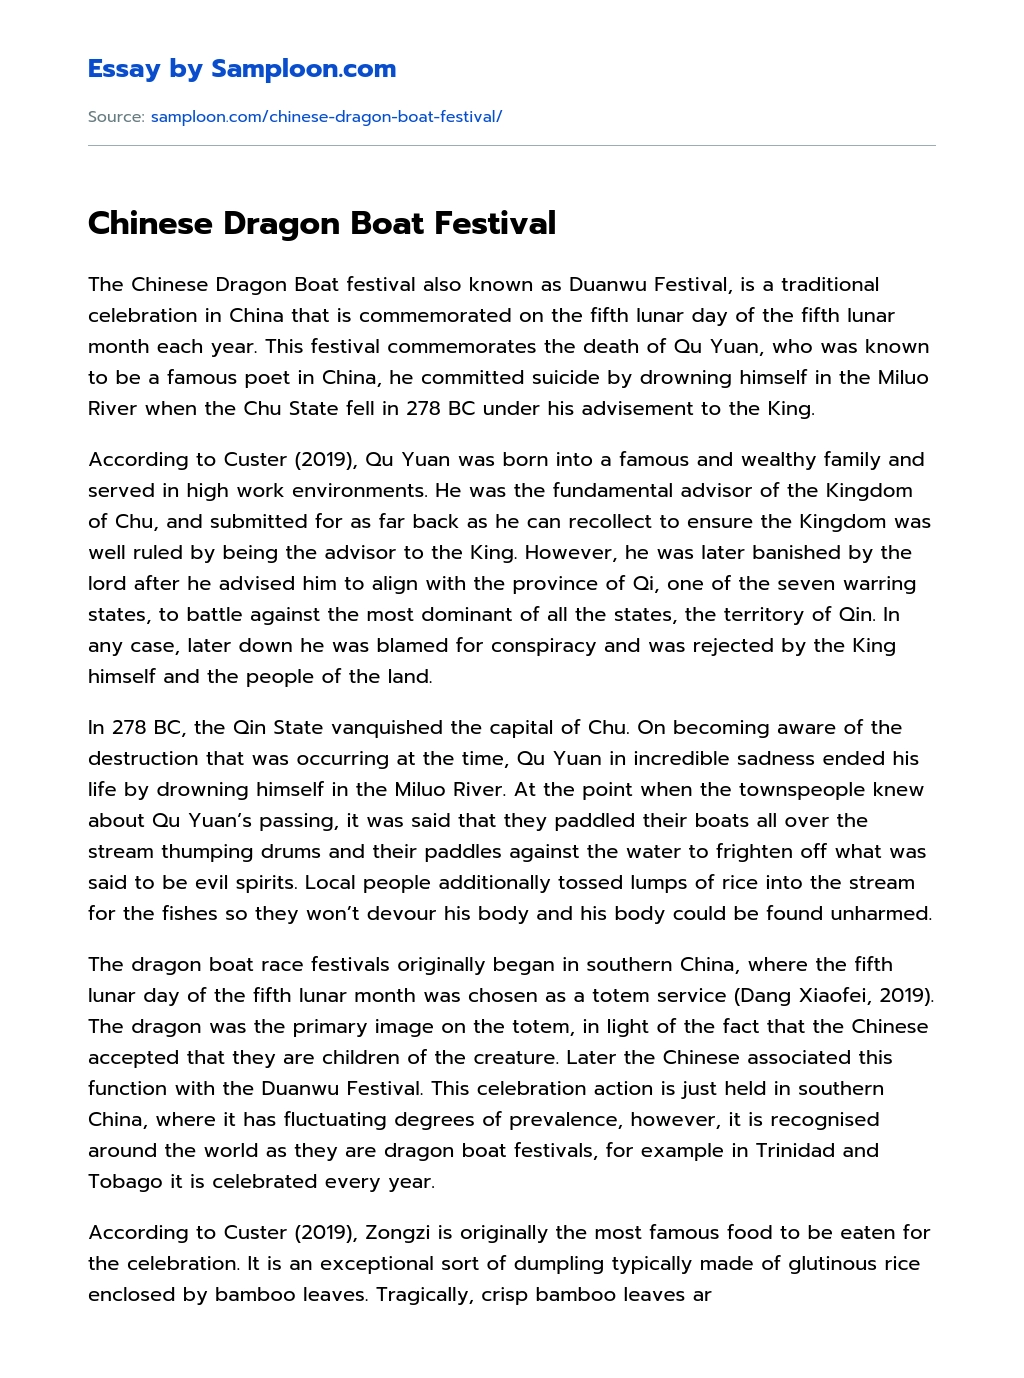 Chinese Dragon Boat Festival essay